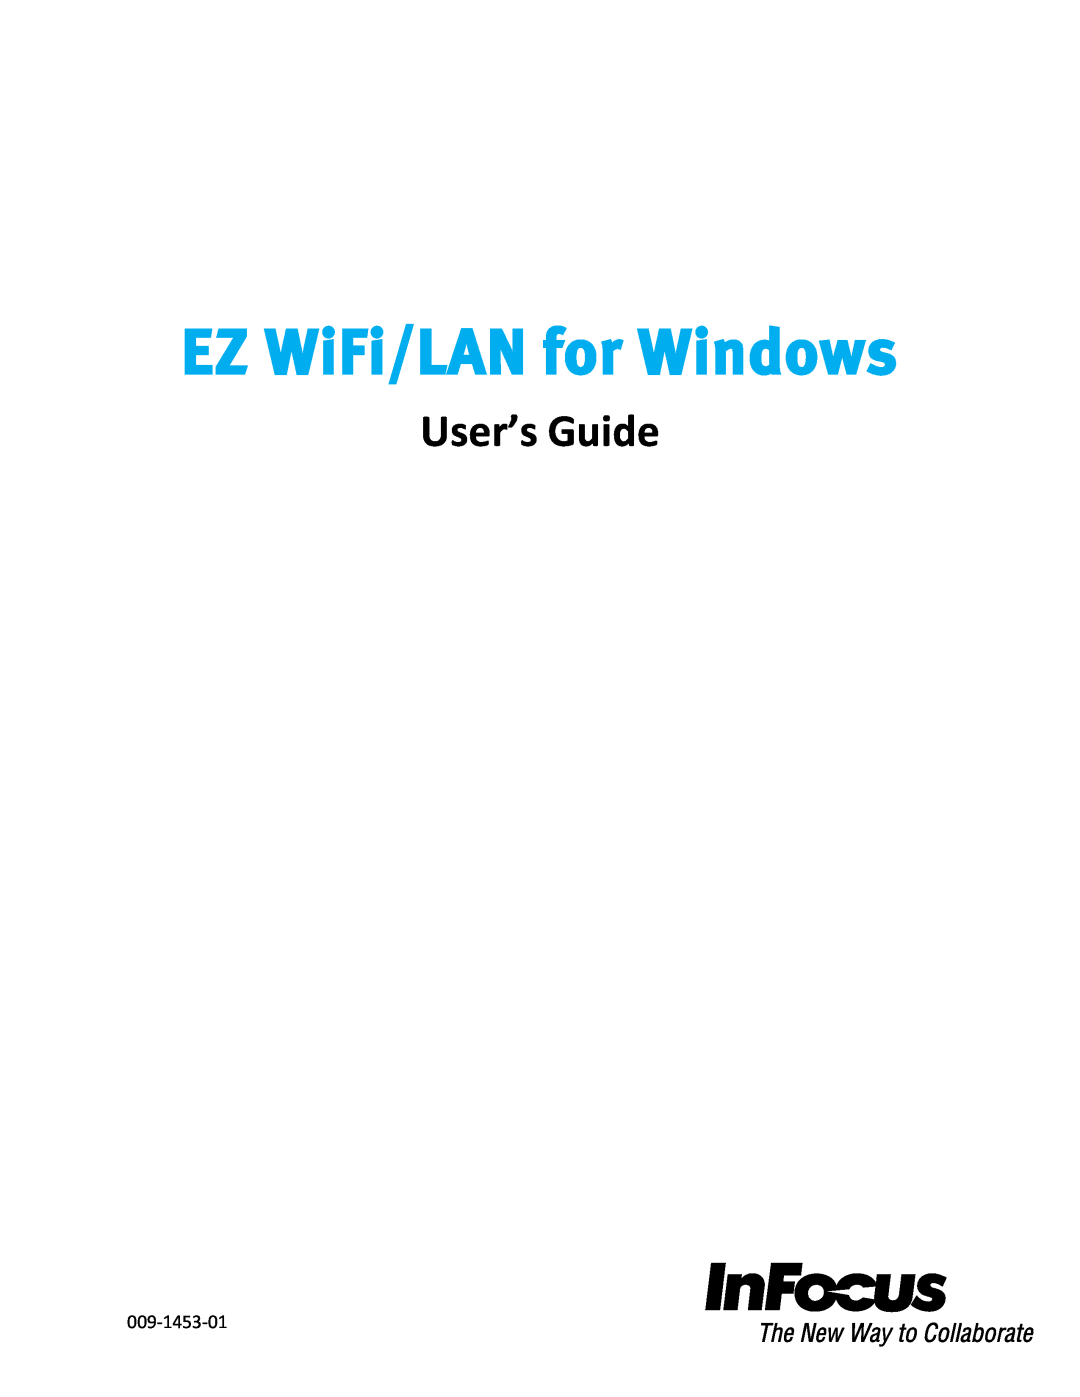 InFocus 009-1453-01 manual EZ WiFi/LAN for Windows, User’s Guide 